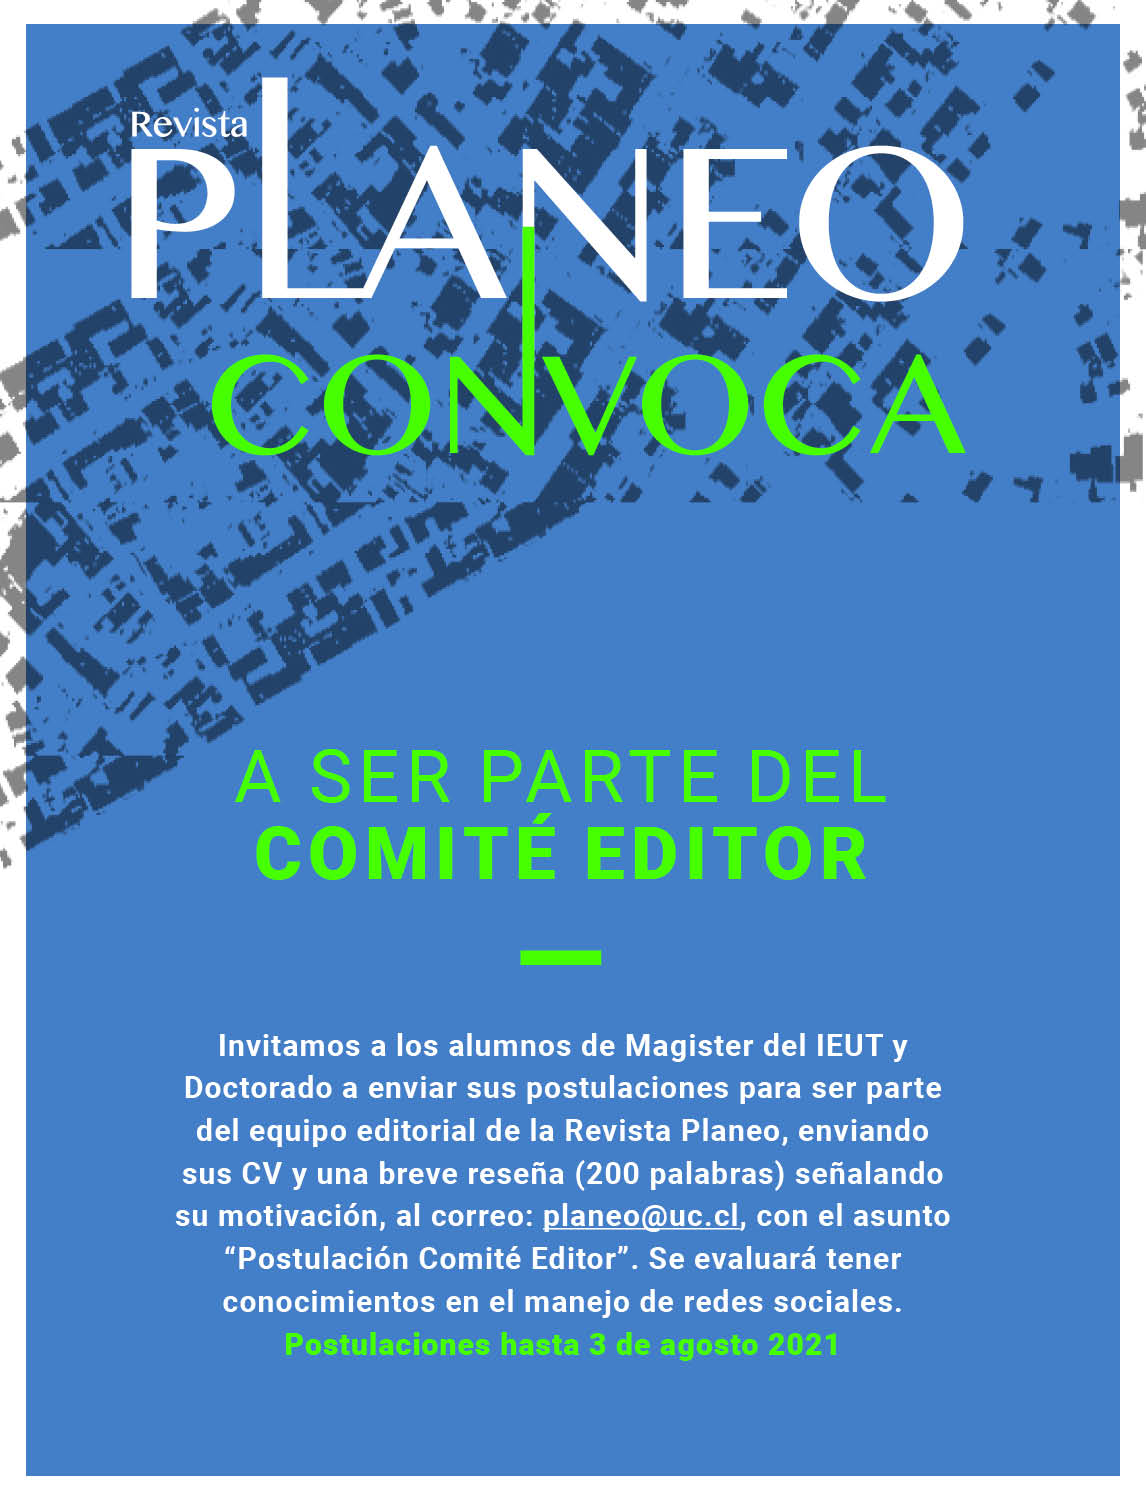 CONVOCATORIA PLANEO | Comité Editor